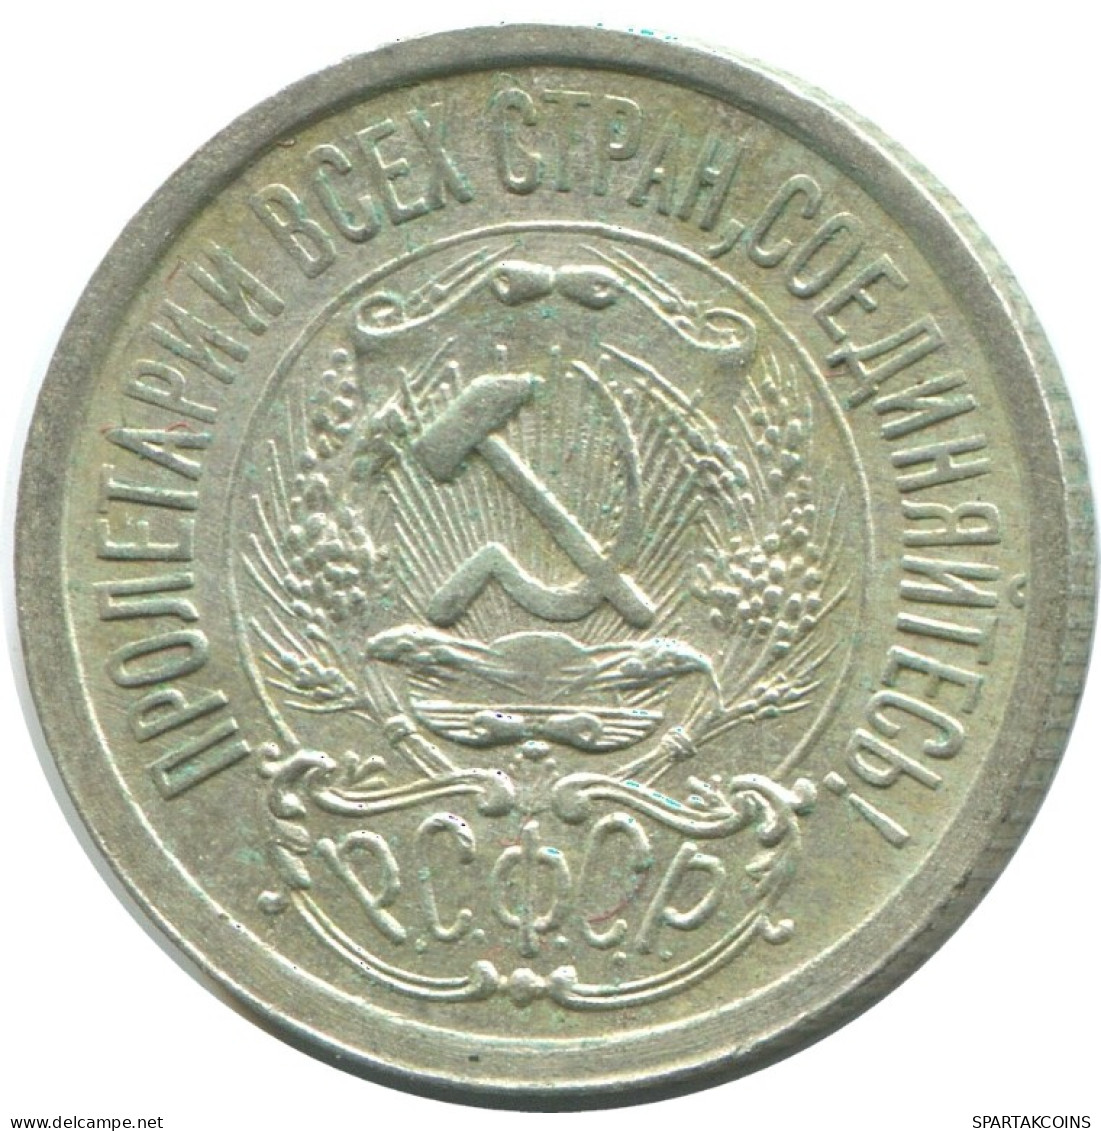 15 KOPEKS 1923 RUSSIA RSFSR SILVER Coin HIGH GRADE #AF021.4.U.A - Russia